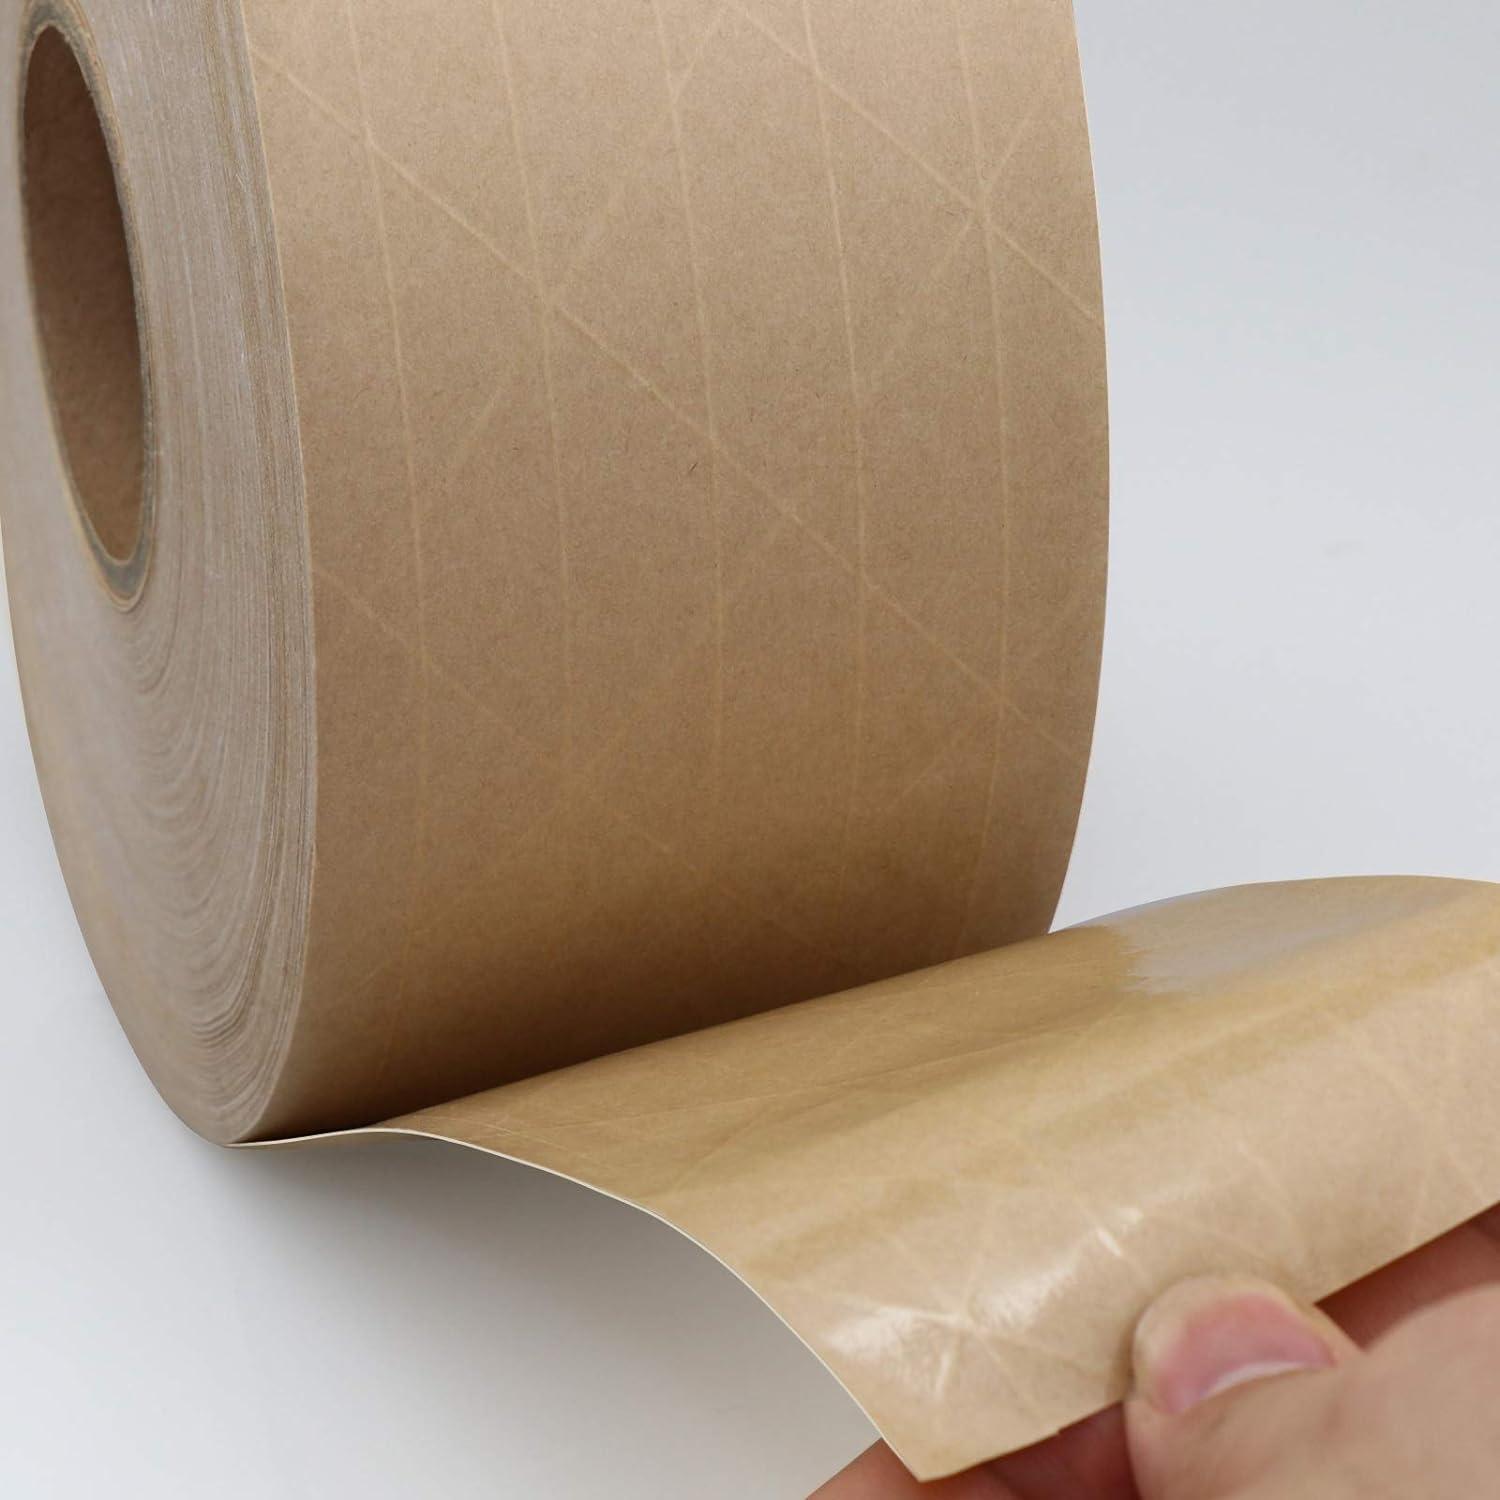 Packing Packaging Brown Kraft Paper Gummed Tape for Masking,Moving,Shipping  Cart